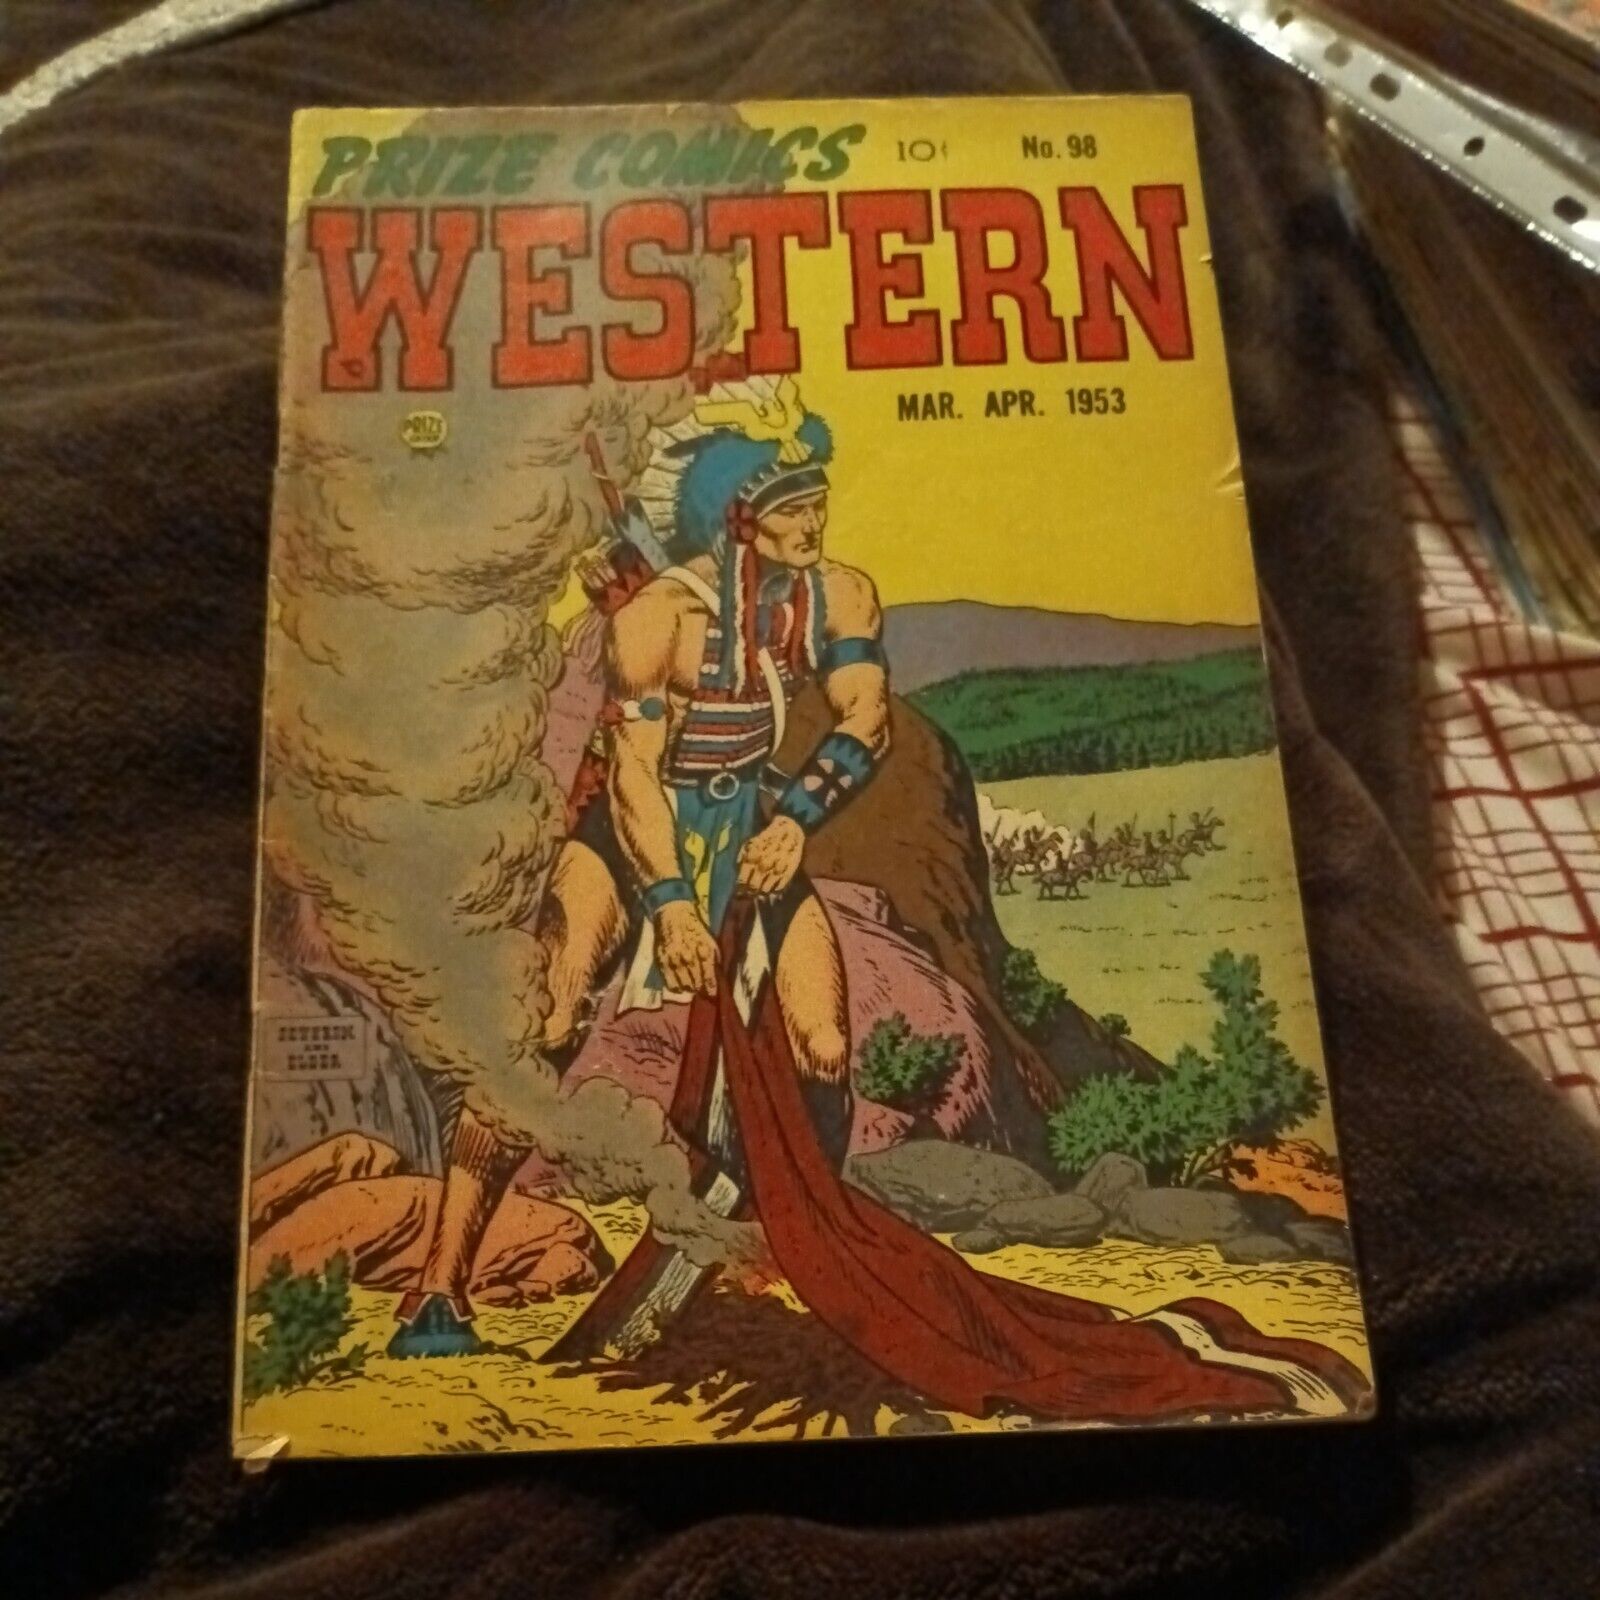 Prize Comics Western #98 1953-AMERICAN EAGLE-Severin cover art golden age book